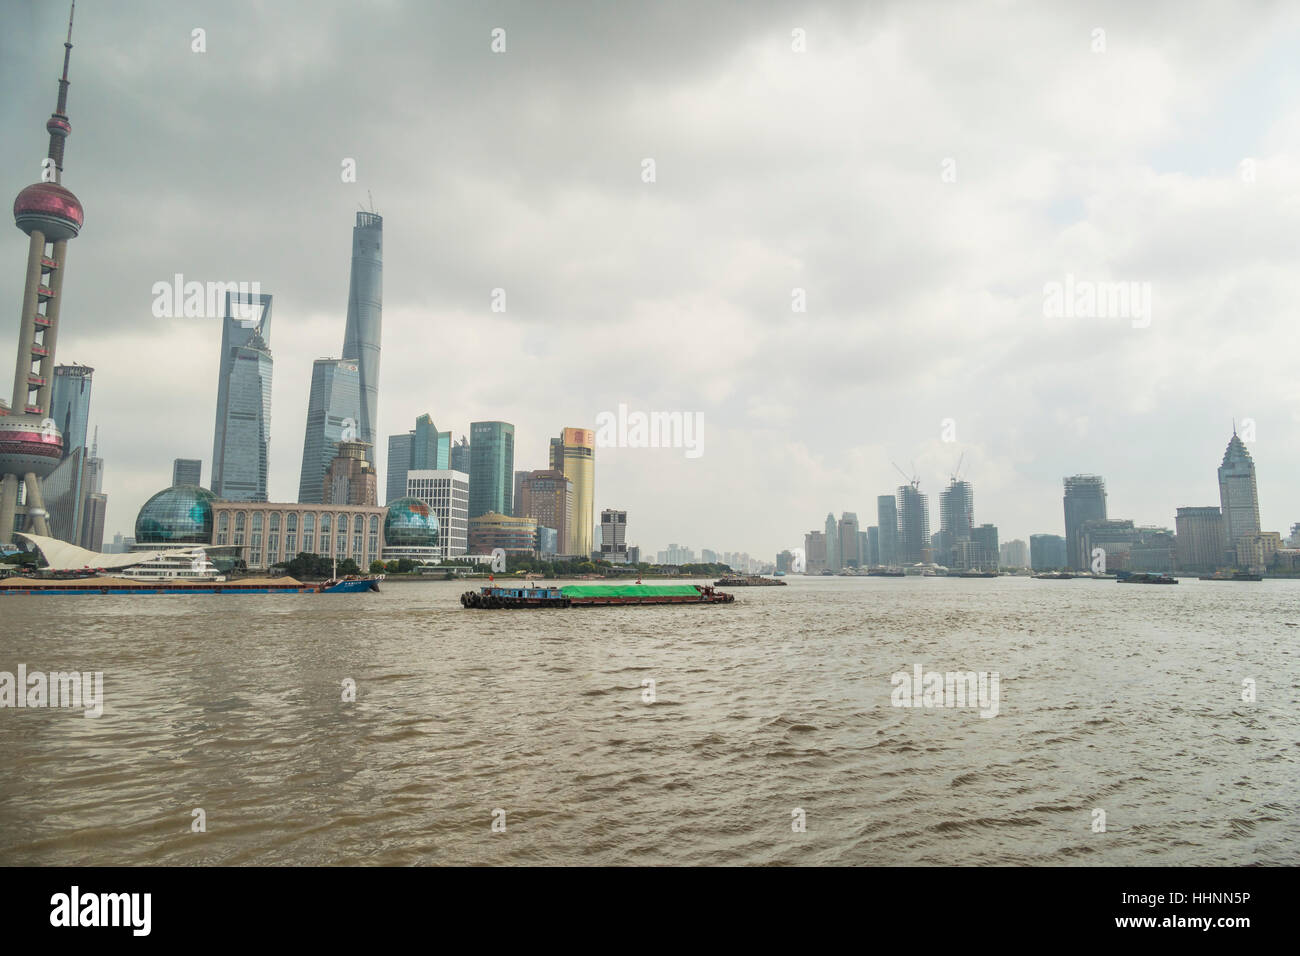 Navi cargo vela attraverso il fiume Huangpu, Shanghai, Cina Foto Stock